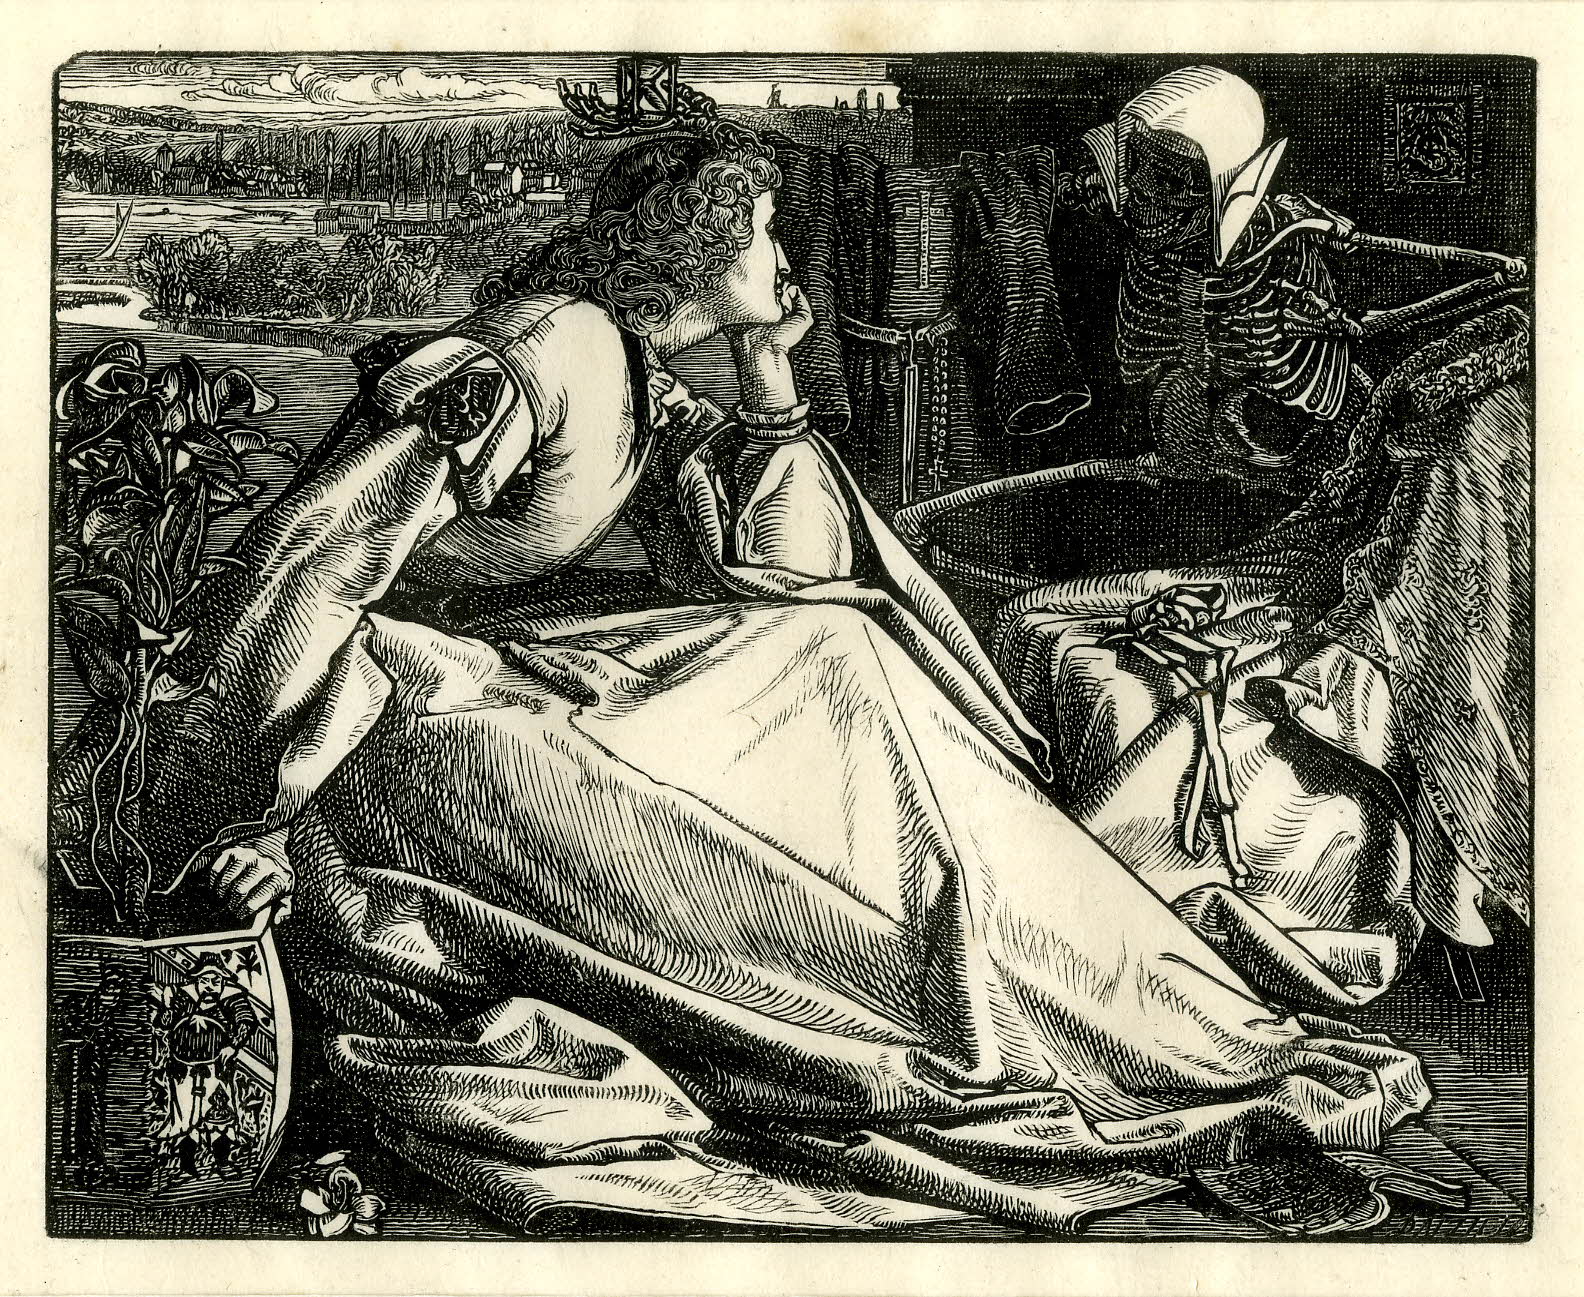 Until her Death by Frederick Augustus Sandys - 1862 - 101 x 125 mm British Museum